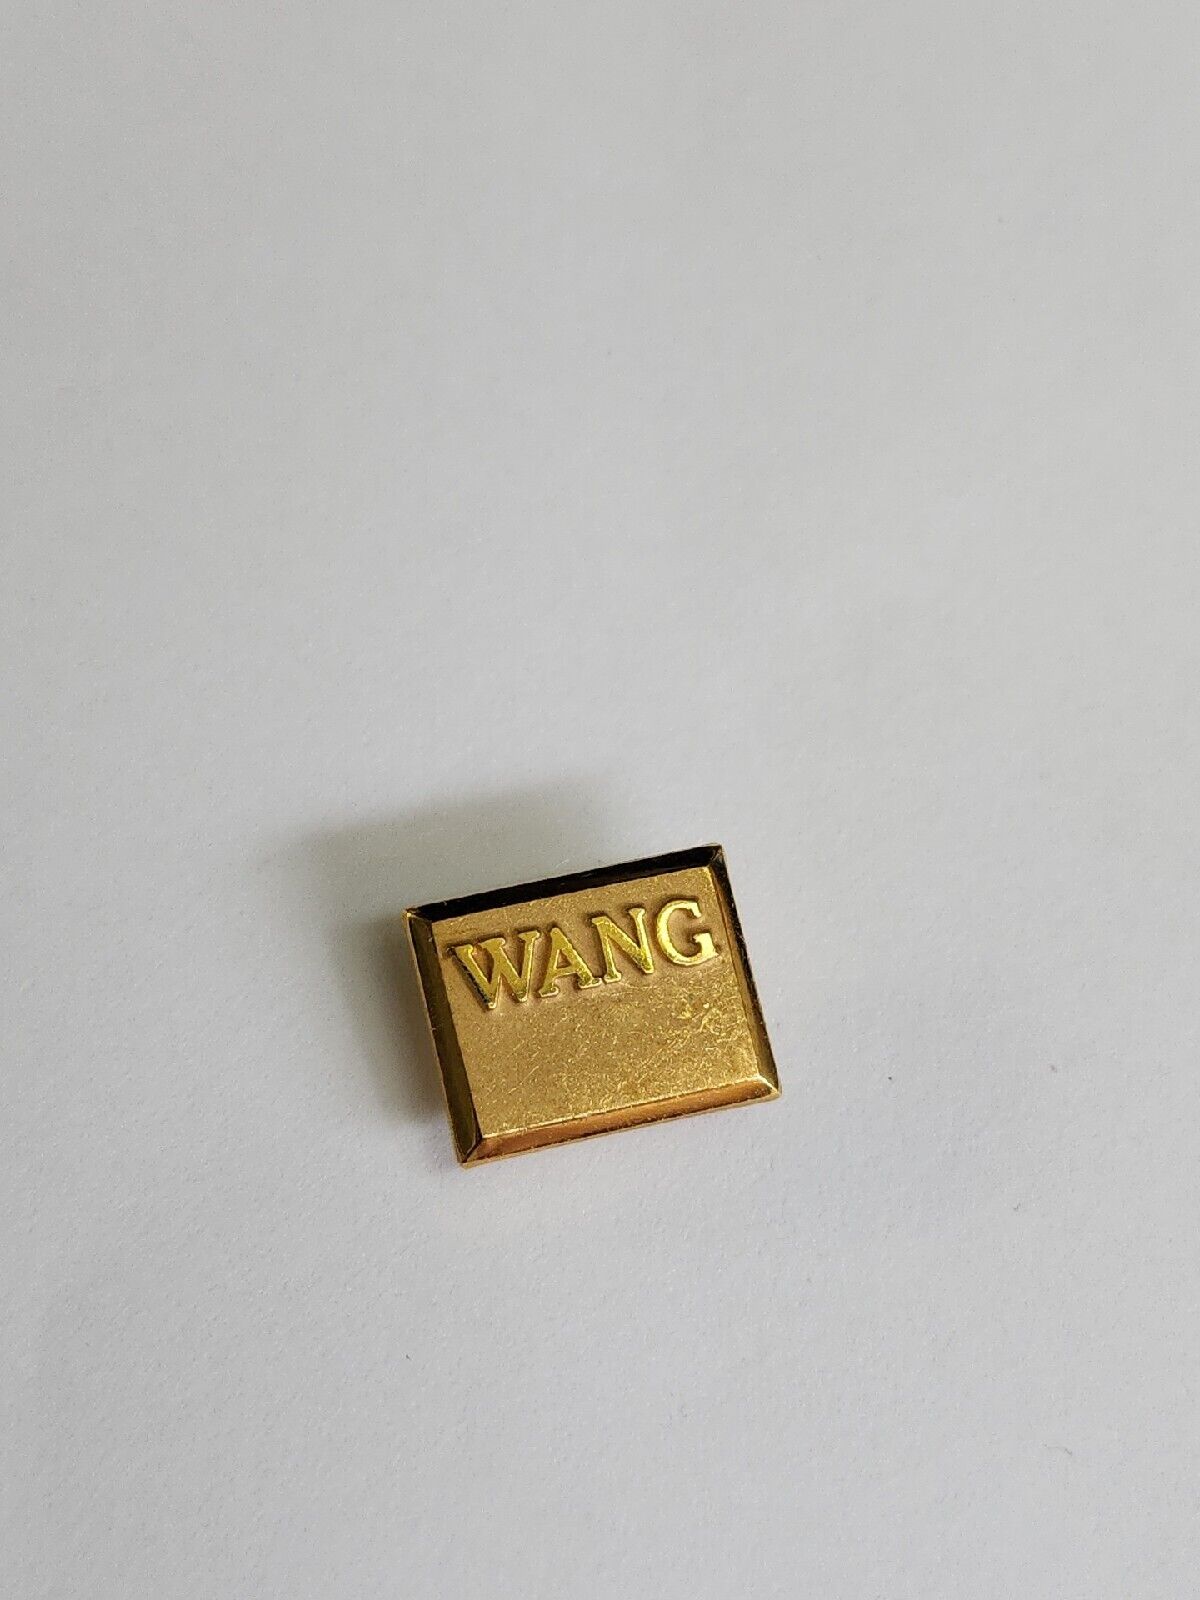 Wang Laboratories Tie Tack w/ Chain & Bar 1/10th 10K Gold Defunct Computers RARE